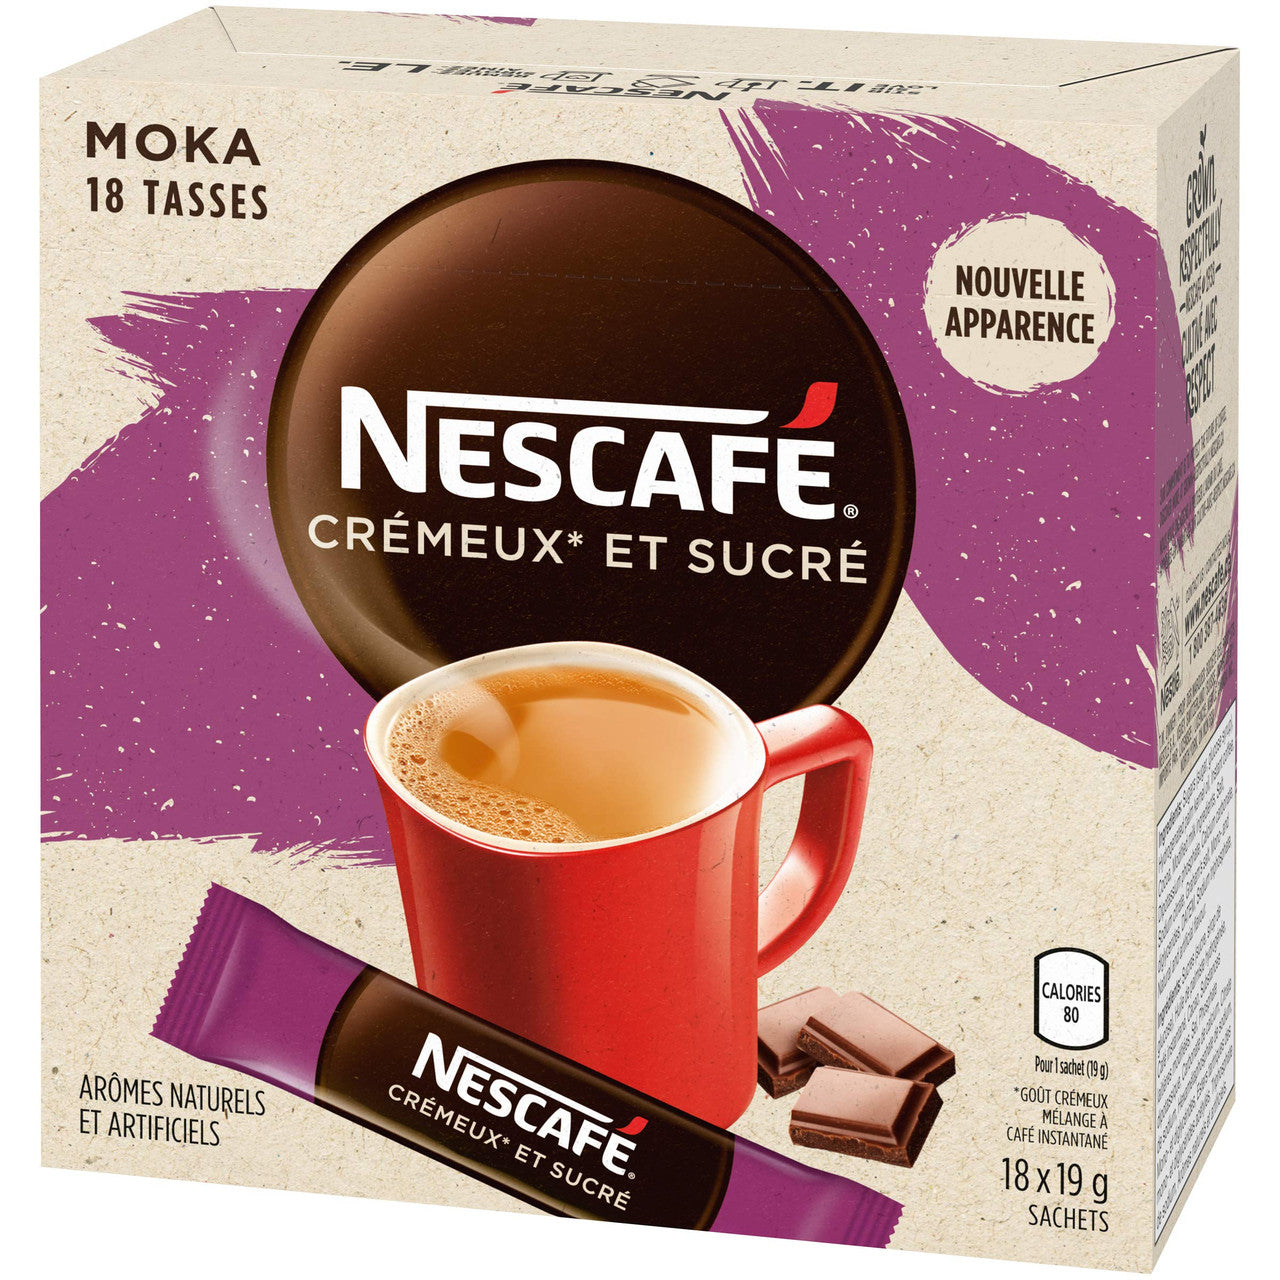 NESCAFE Sweet & Creamy Mocha, Instant Coffee Sachets, 18x19g {Imported from Canada}